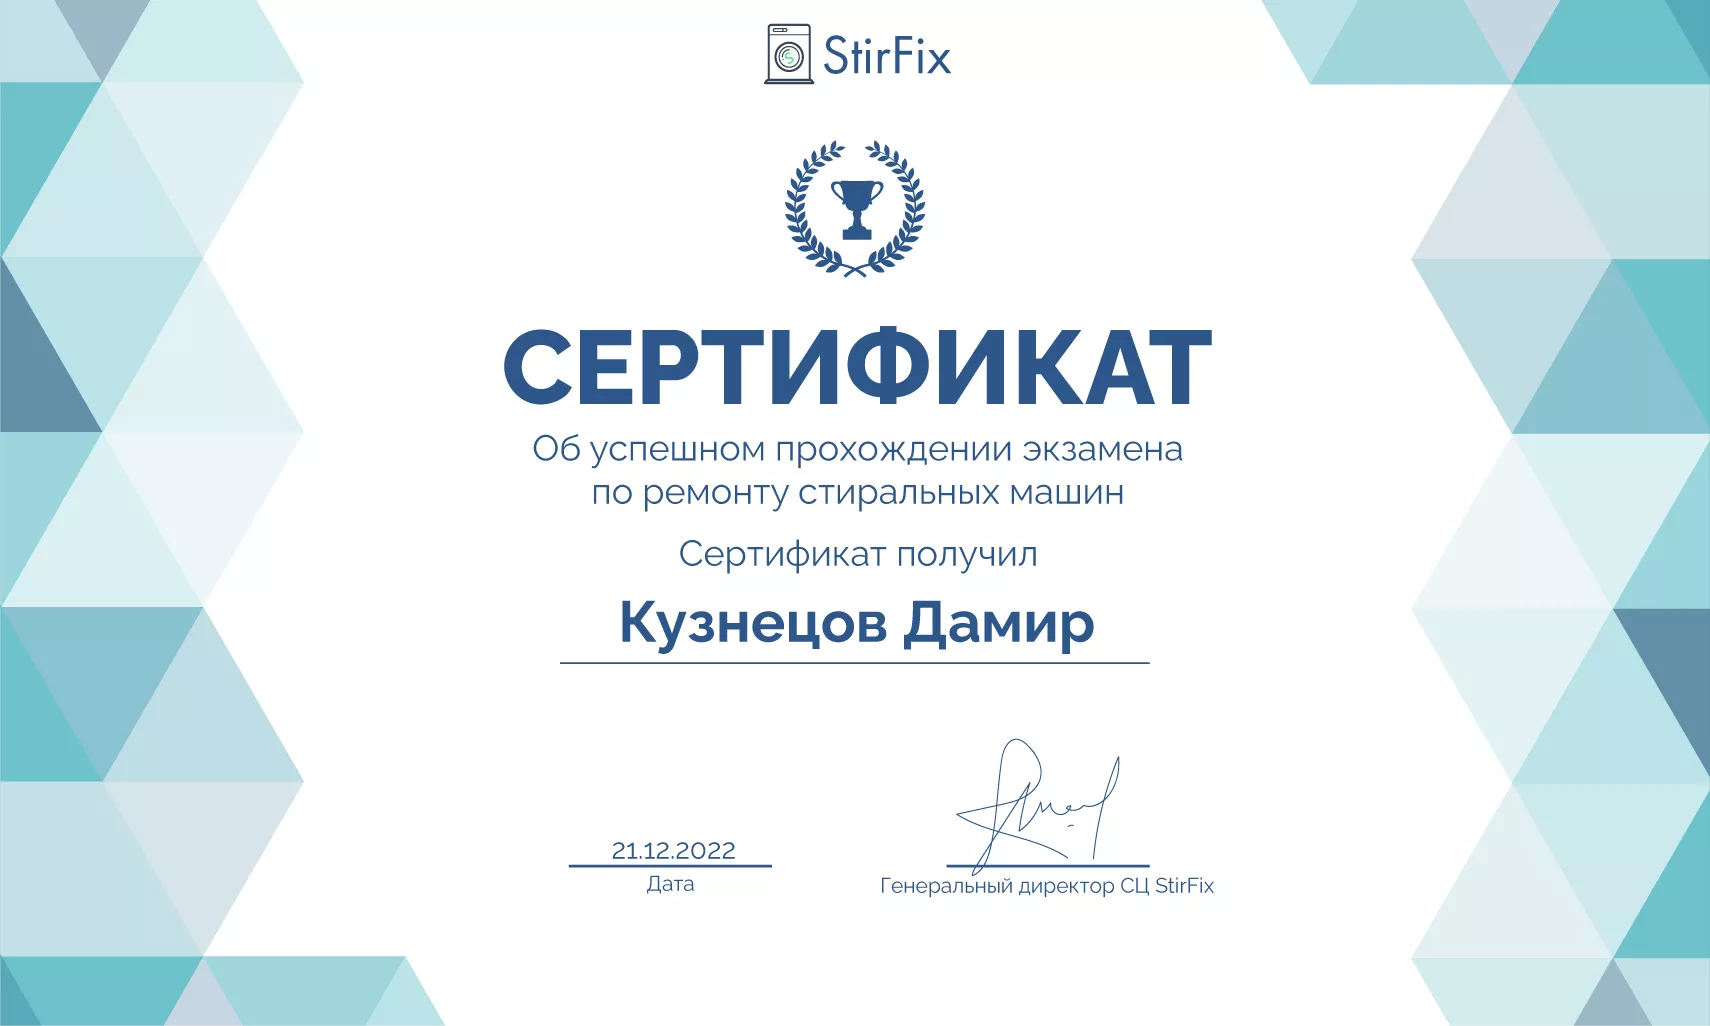 Кузнецов Дамир сертификат телемастера